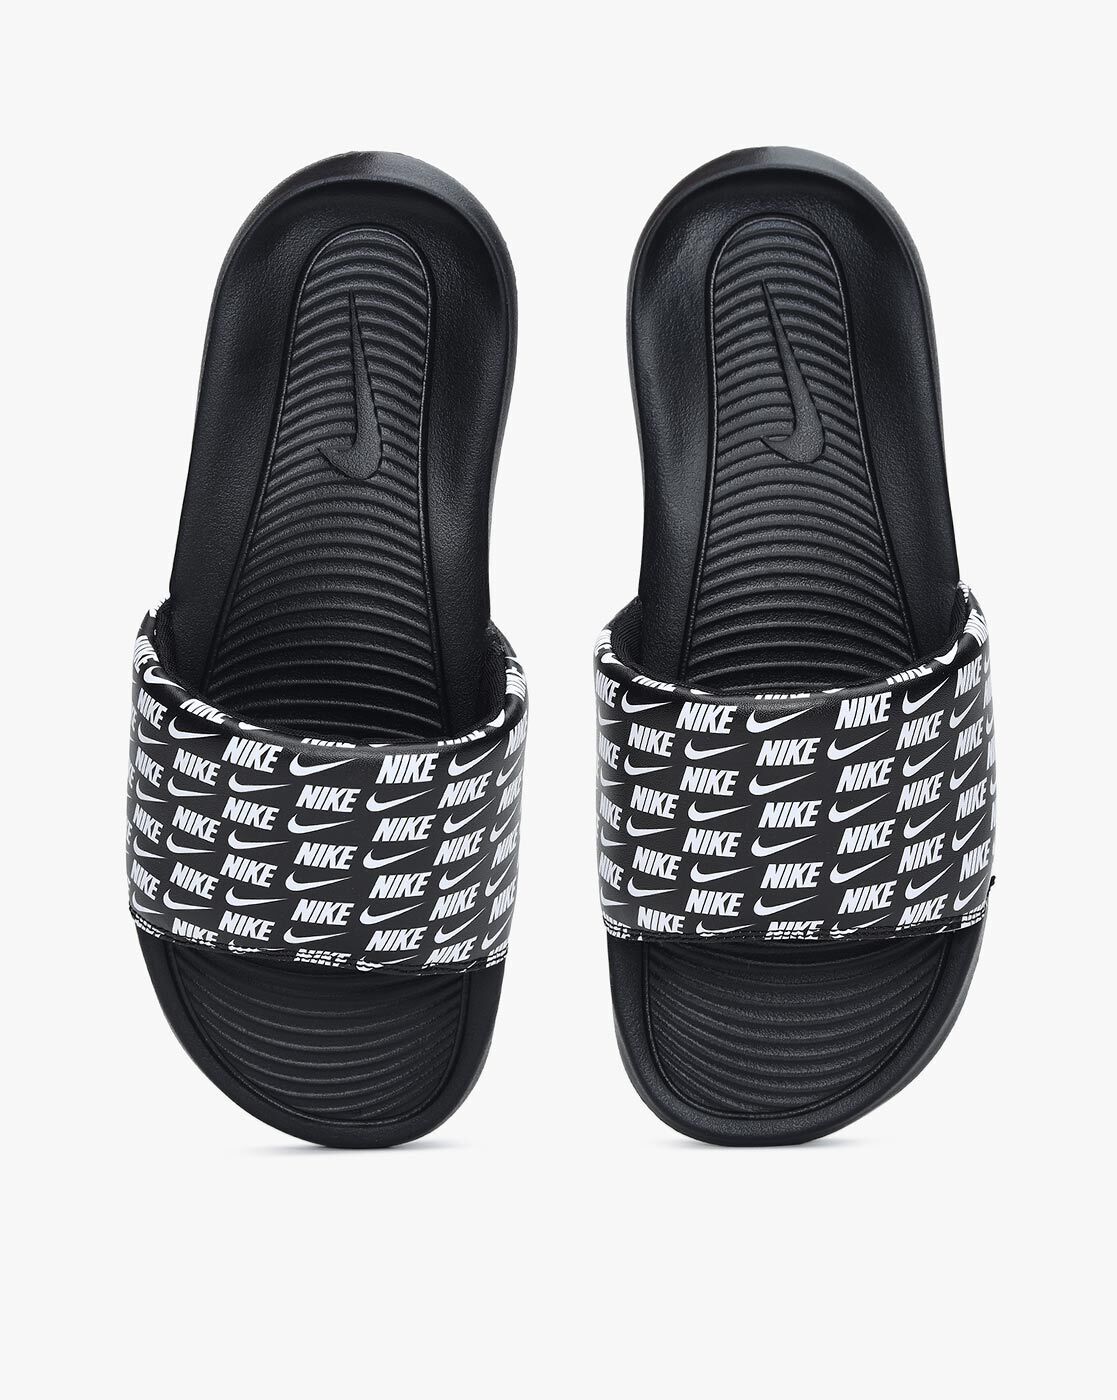 Nike | Shoes | Nike Womens Kawa Shower Slide Sandals Size 9 New | Poshmark